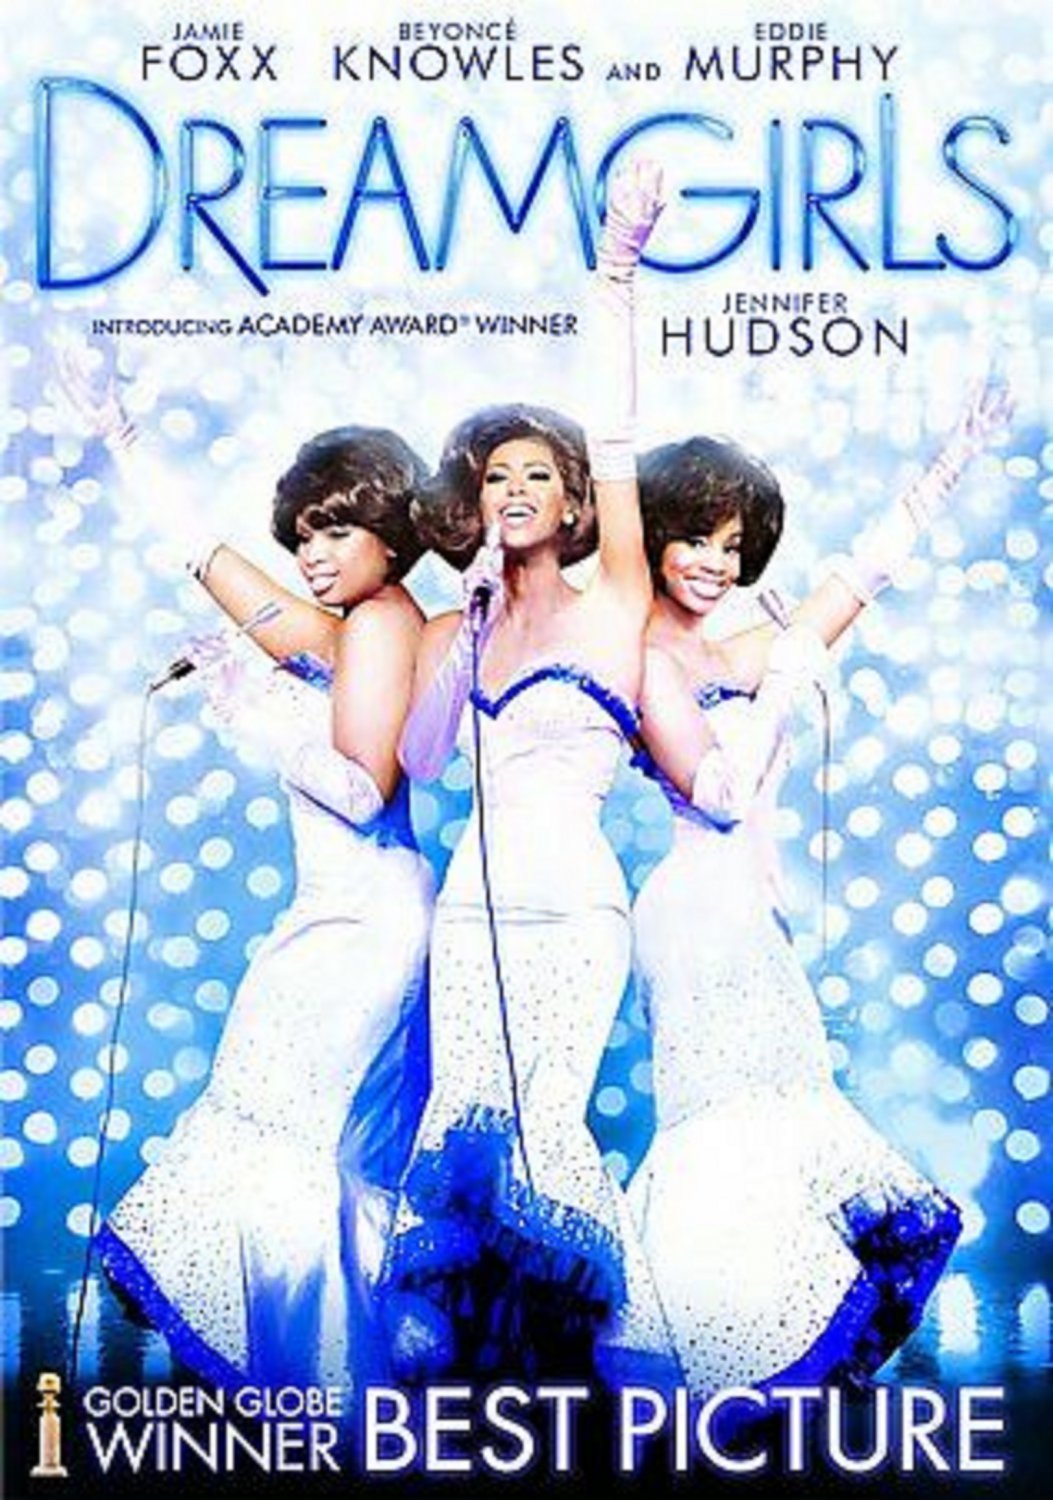 Dreamgirls (Widescreen Edition) - Jamie Foxx, Eddie Murphy, Jennifer Hudson disc LIKE NEW